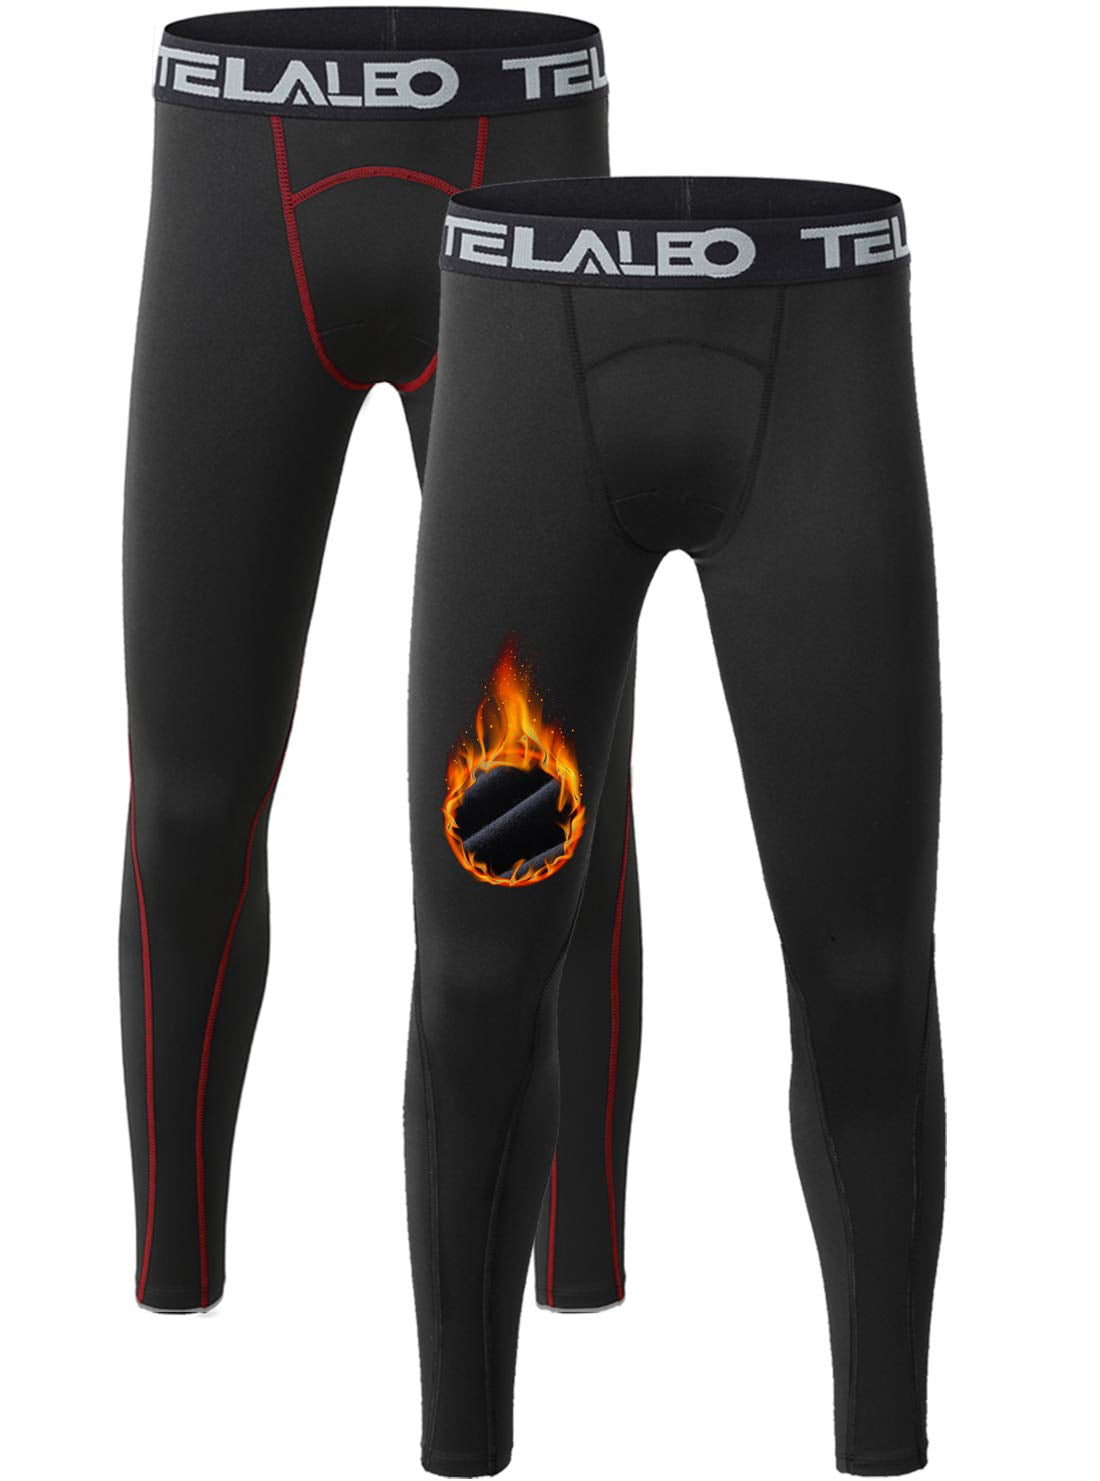 TELALEO Boys Thermal Compression Leggings Pants Youth Fleece Lined Base ...